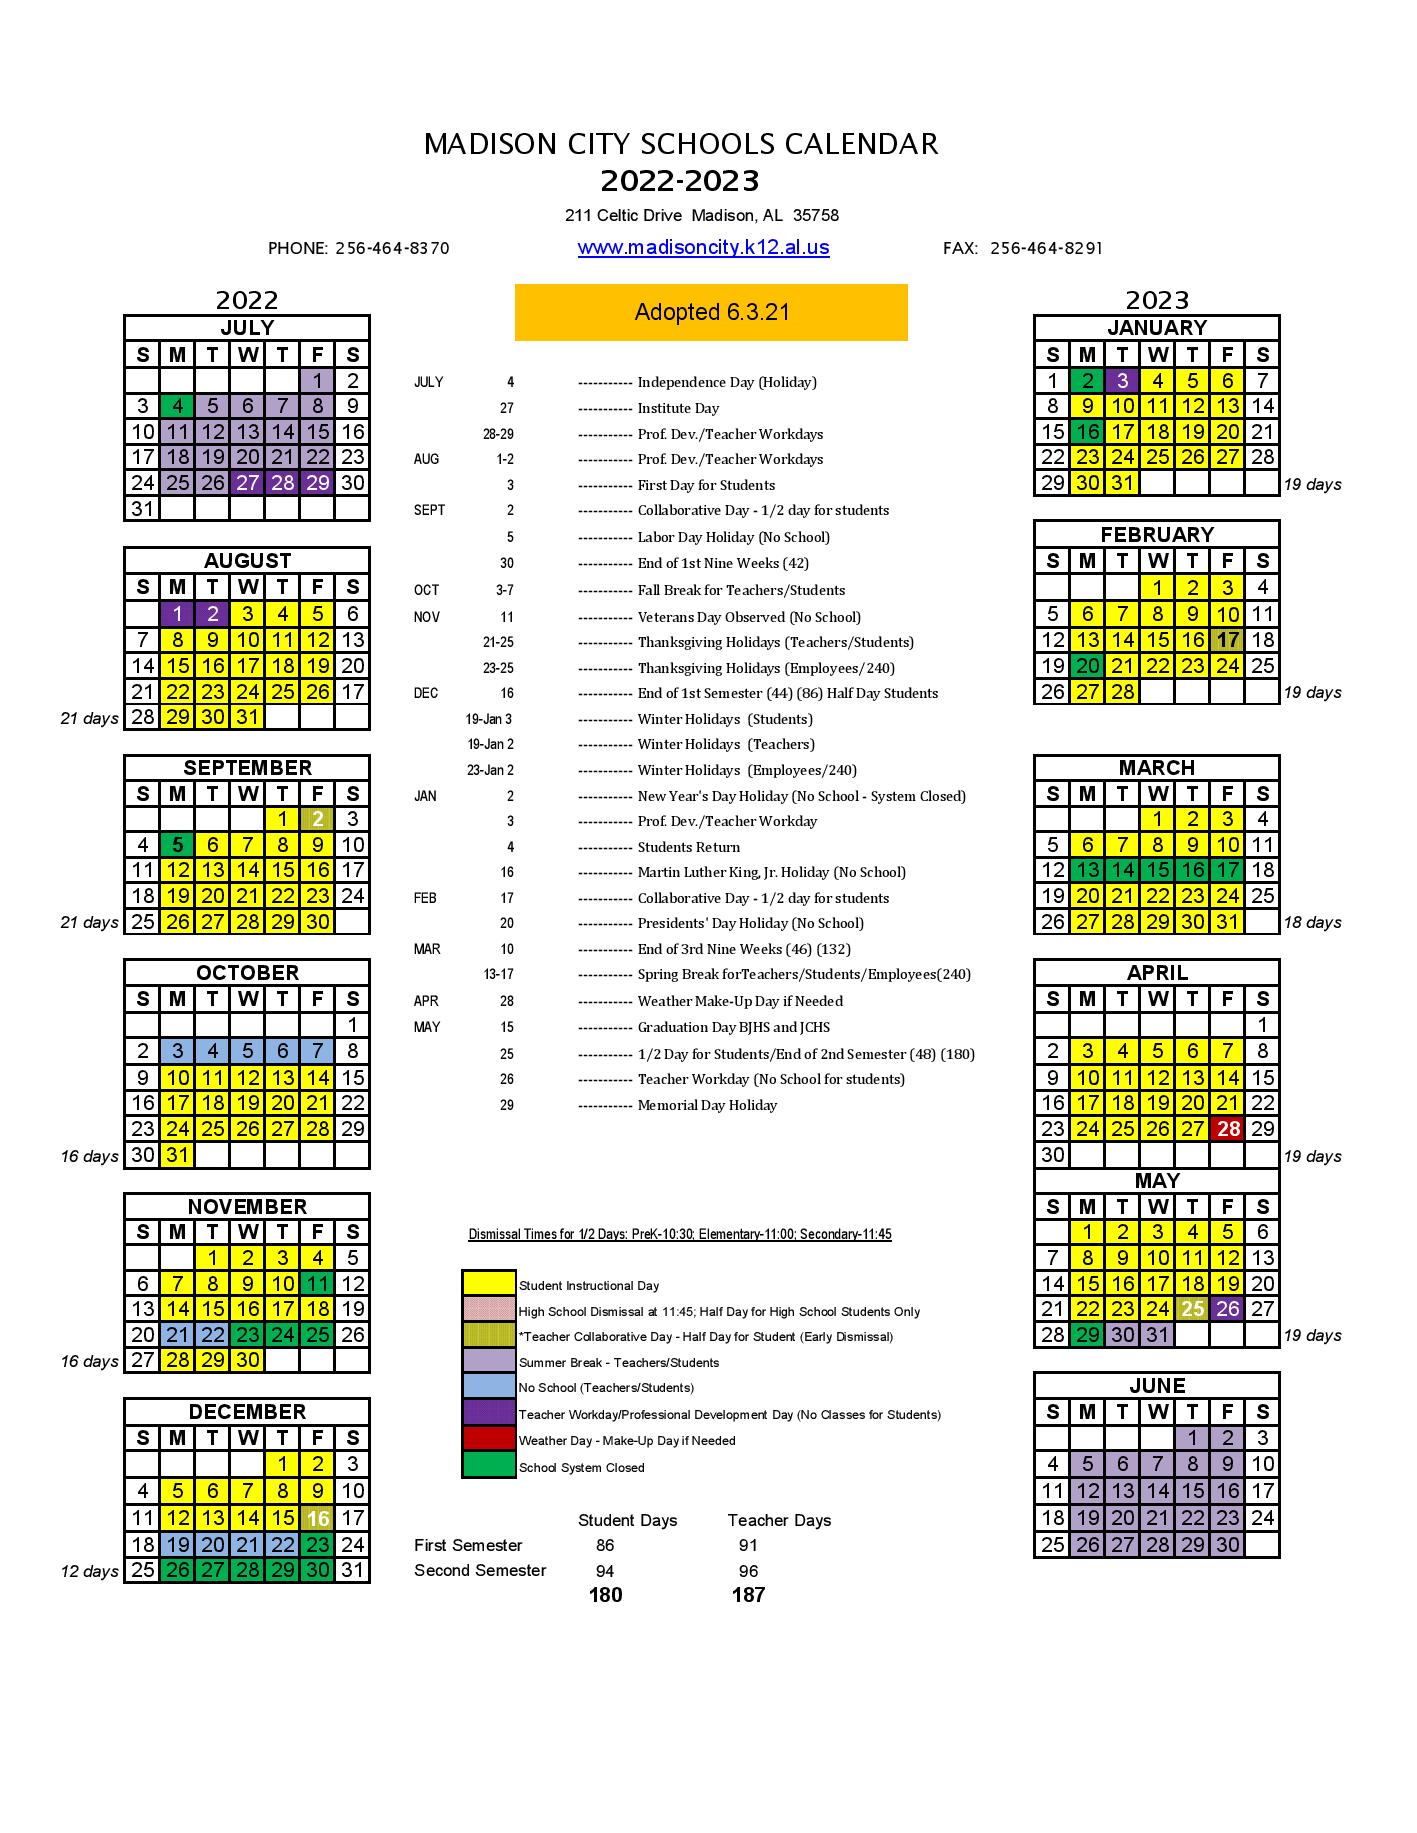 Madison City Schools Calendar 20222023 in PDF